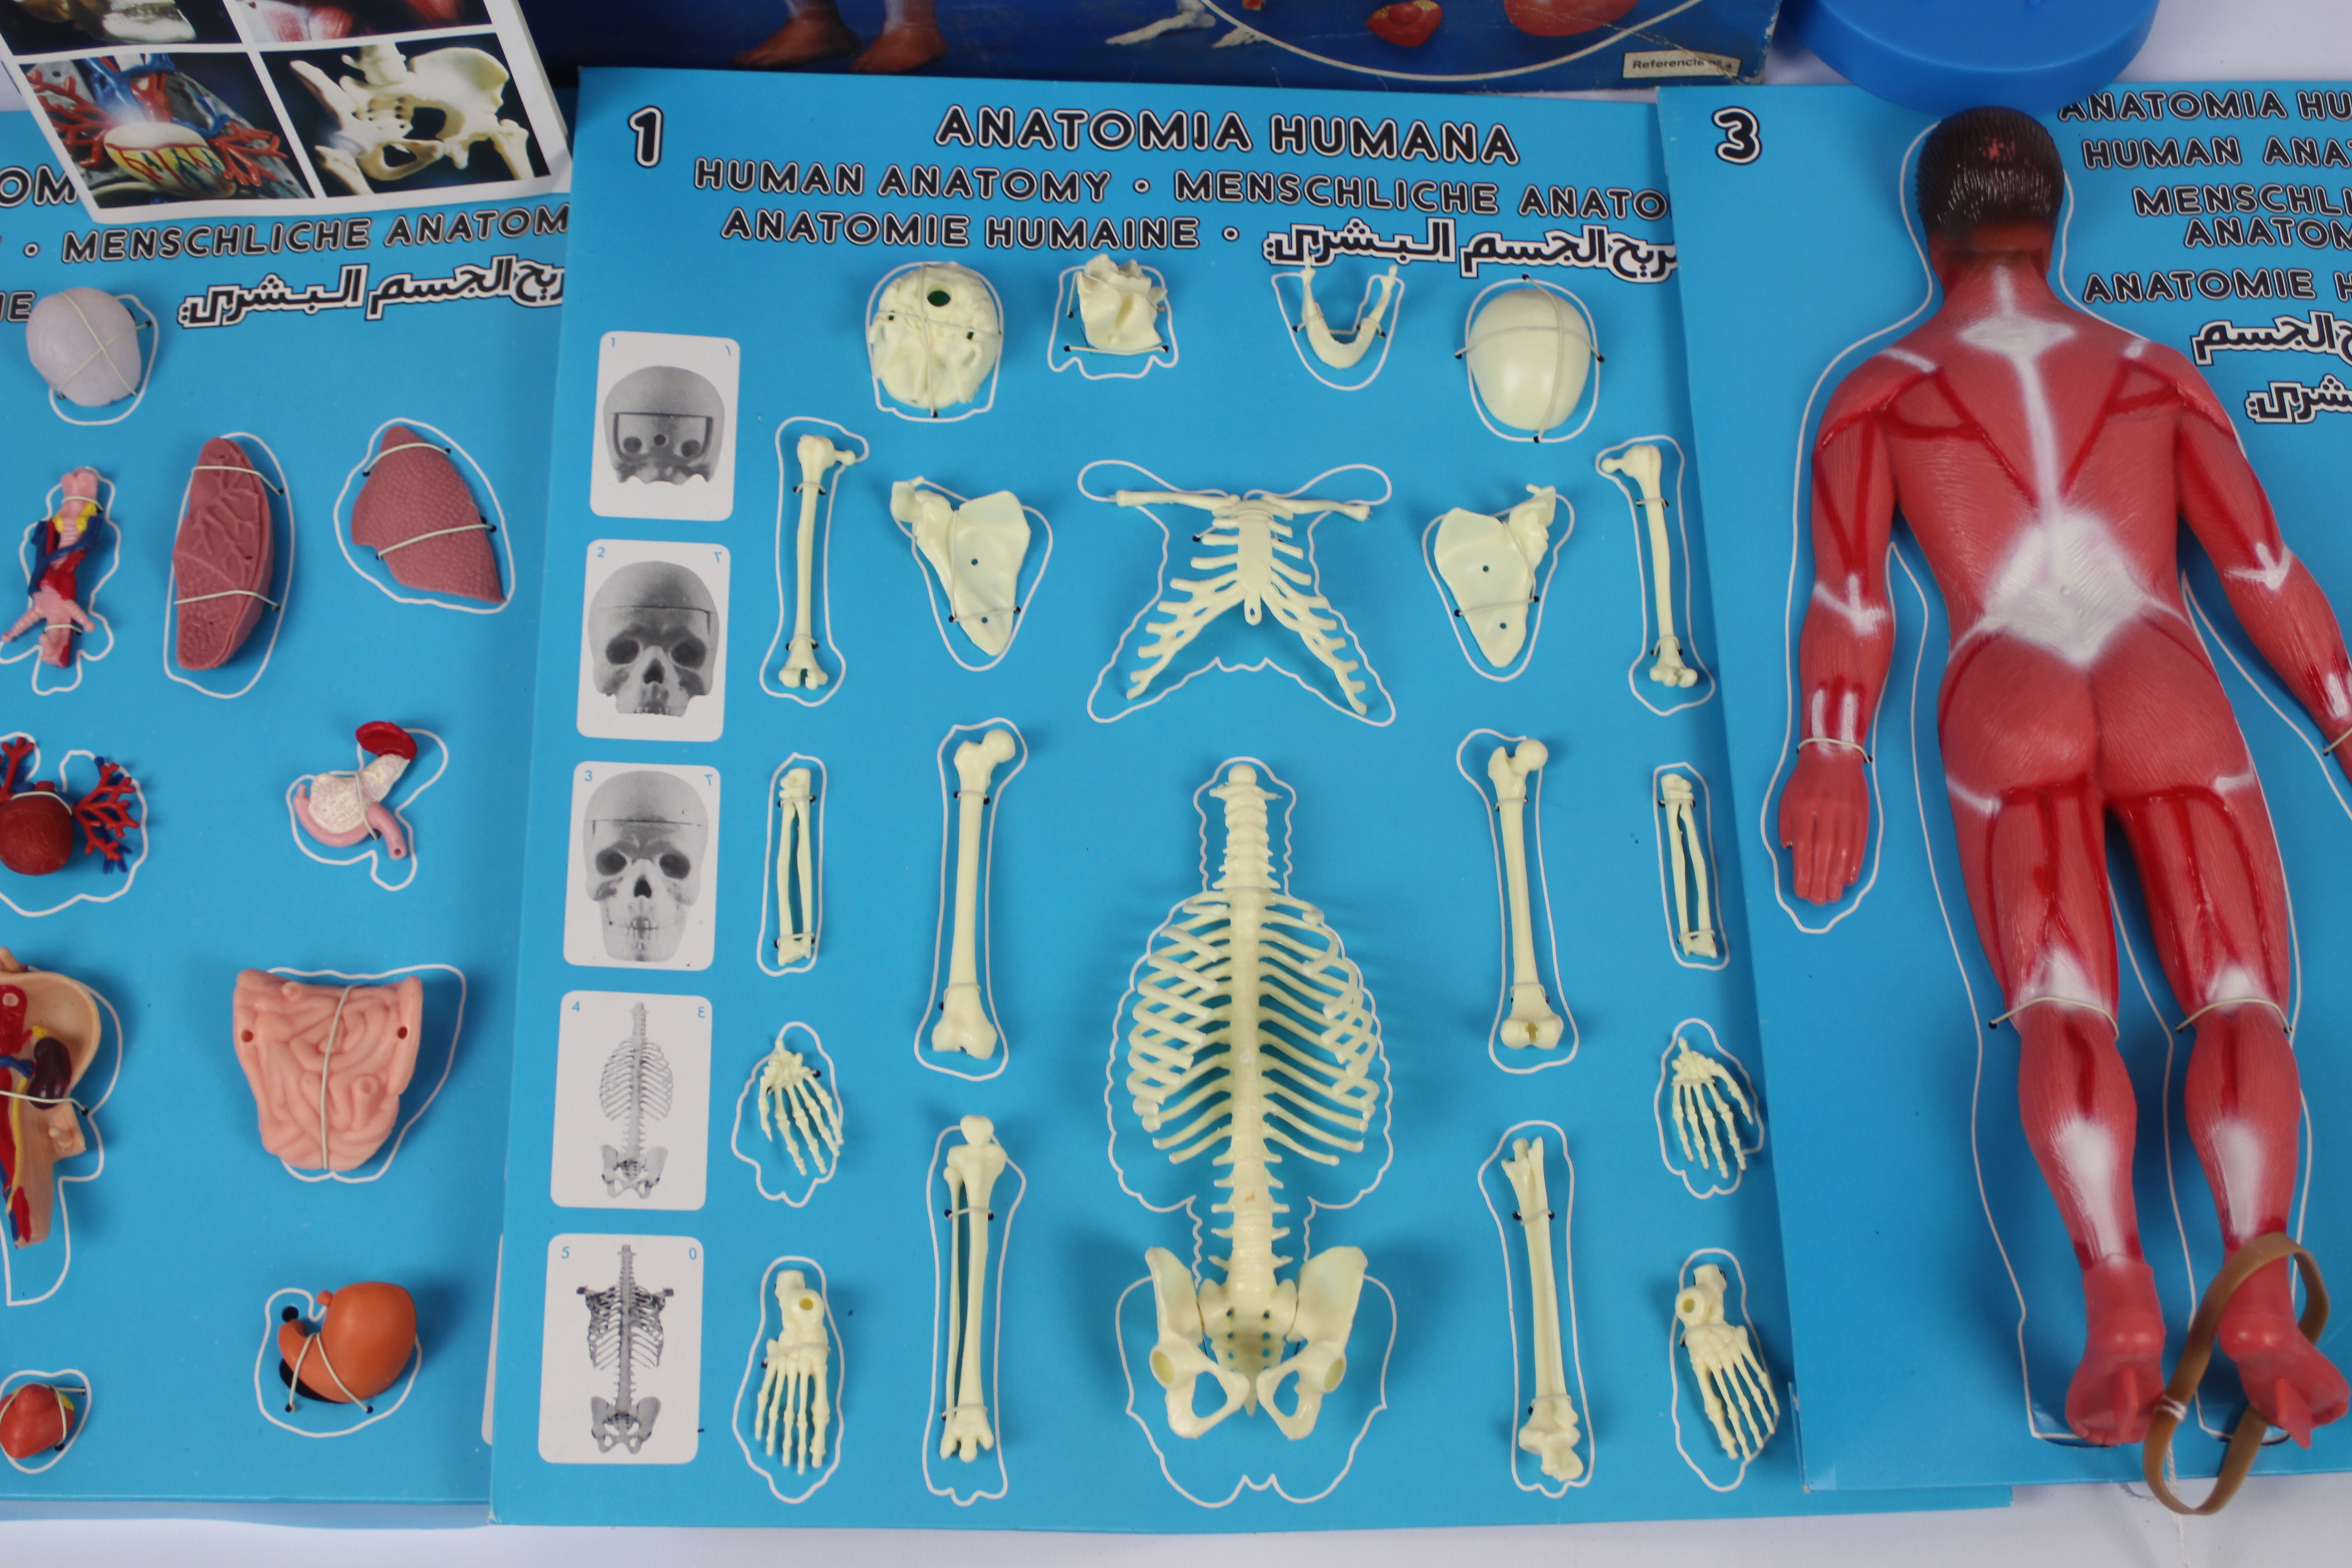 Human Anatomy - Anatomia Humania by Serima. A rare Spanish plastic 1:5 scale, human anatomy model. - Image 5 of 5